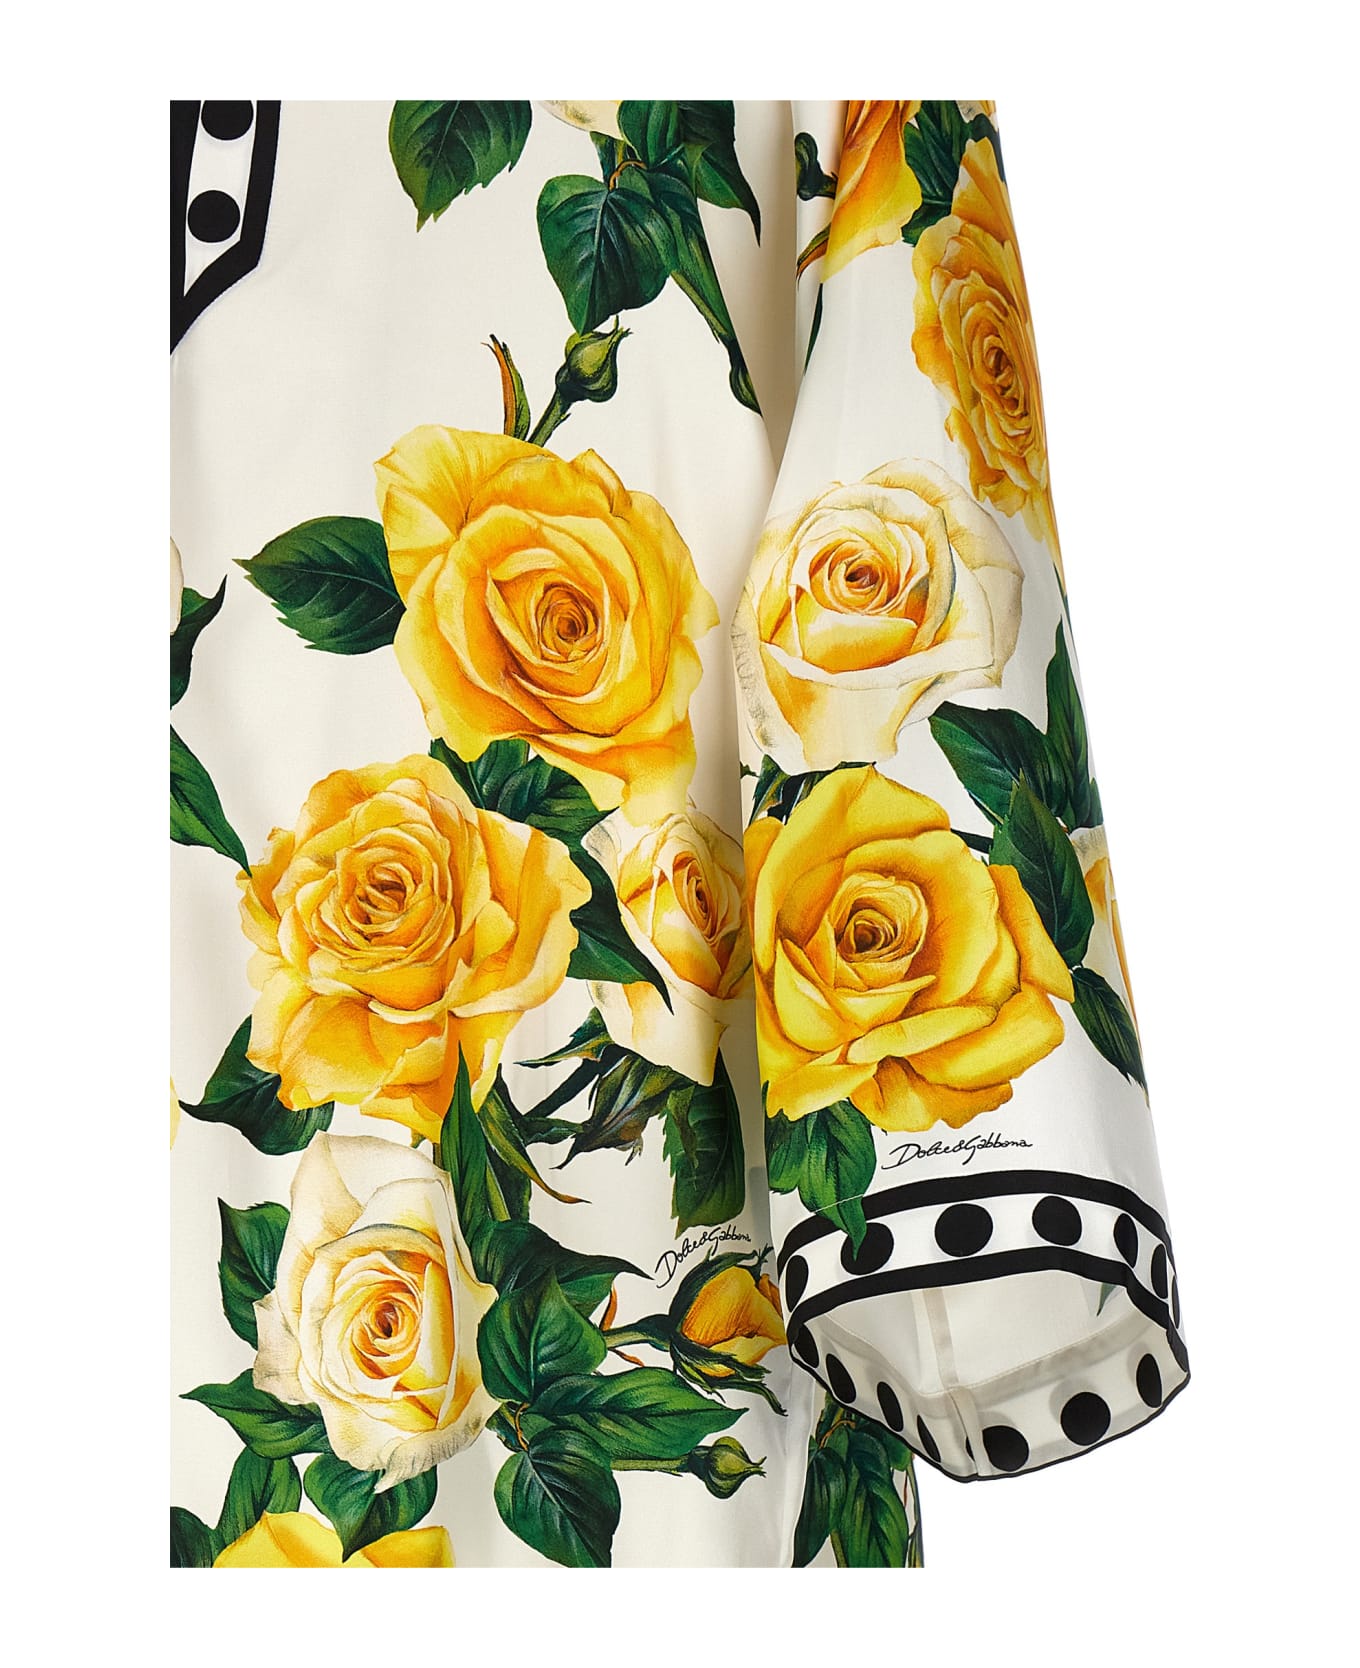 Dolce & Gabbana 'rose Gialle' Dress - Multicolor